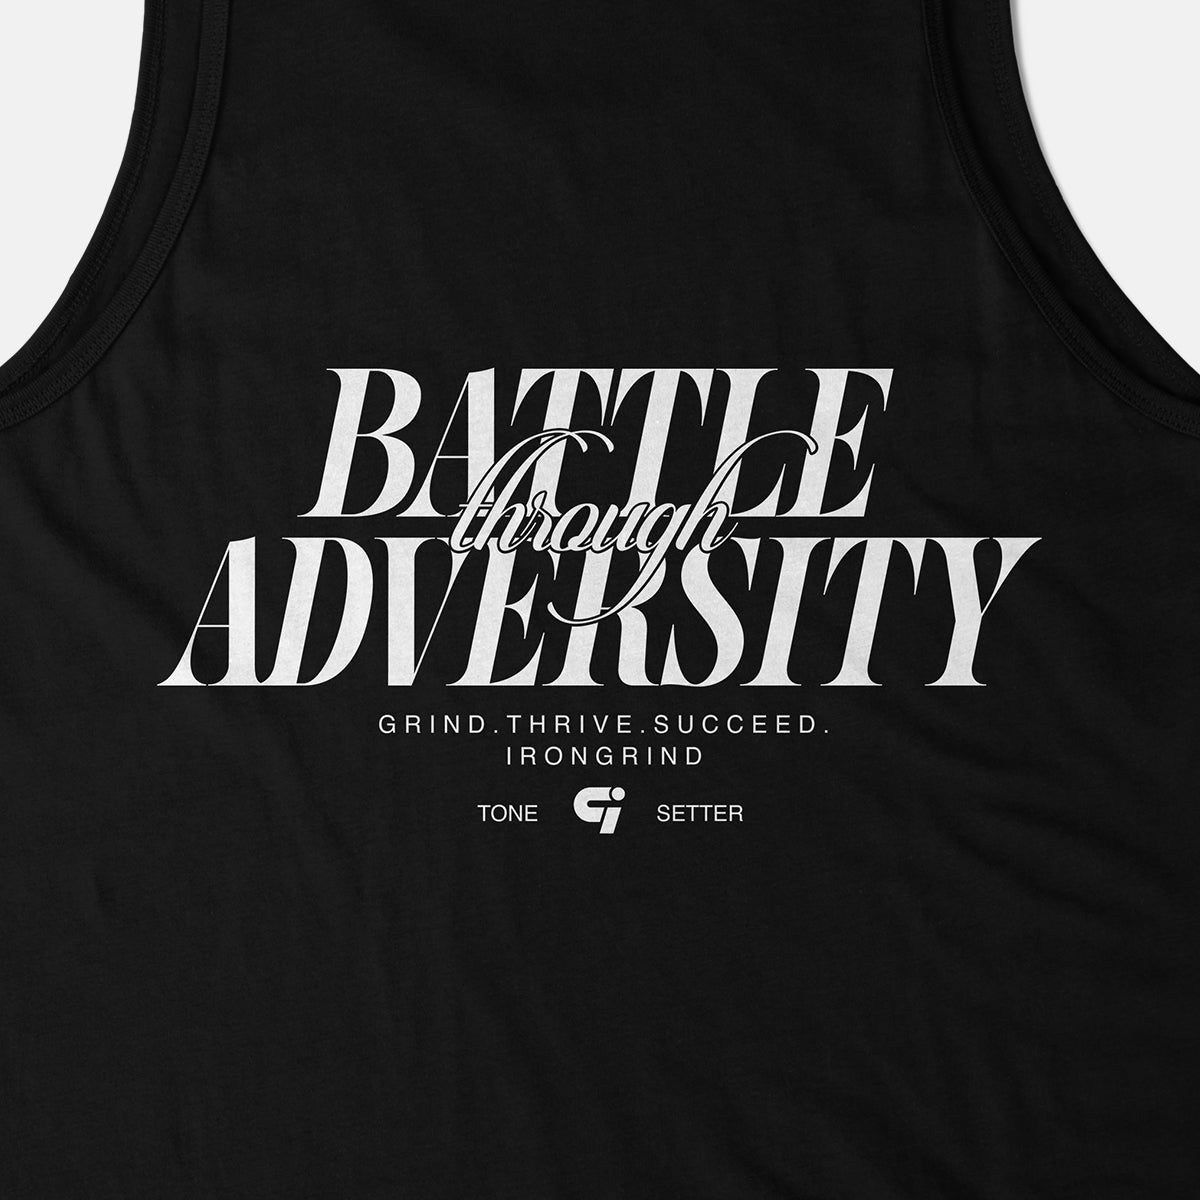 Determination 'Battle Through Adversity' Tank Top